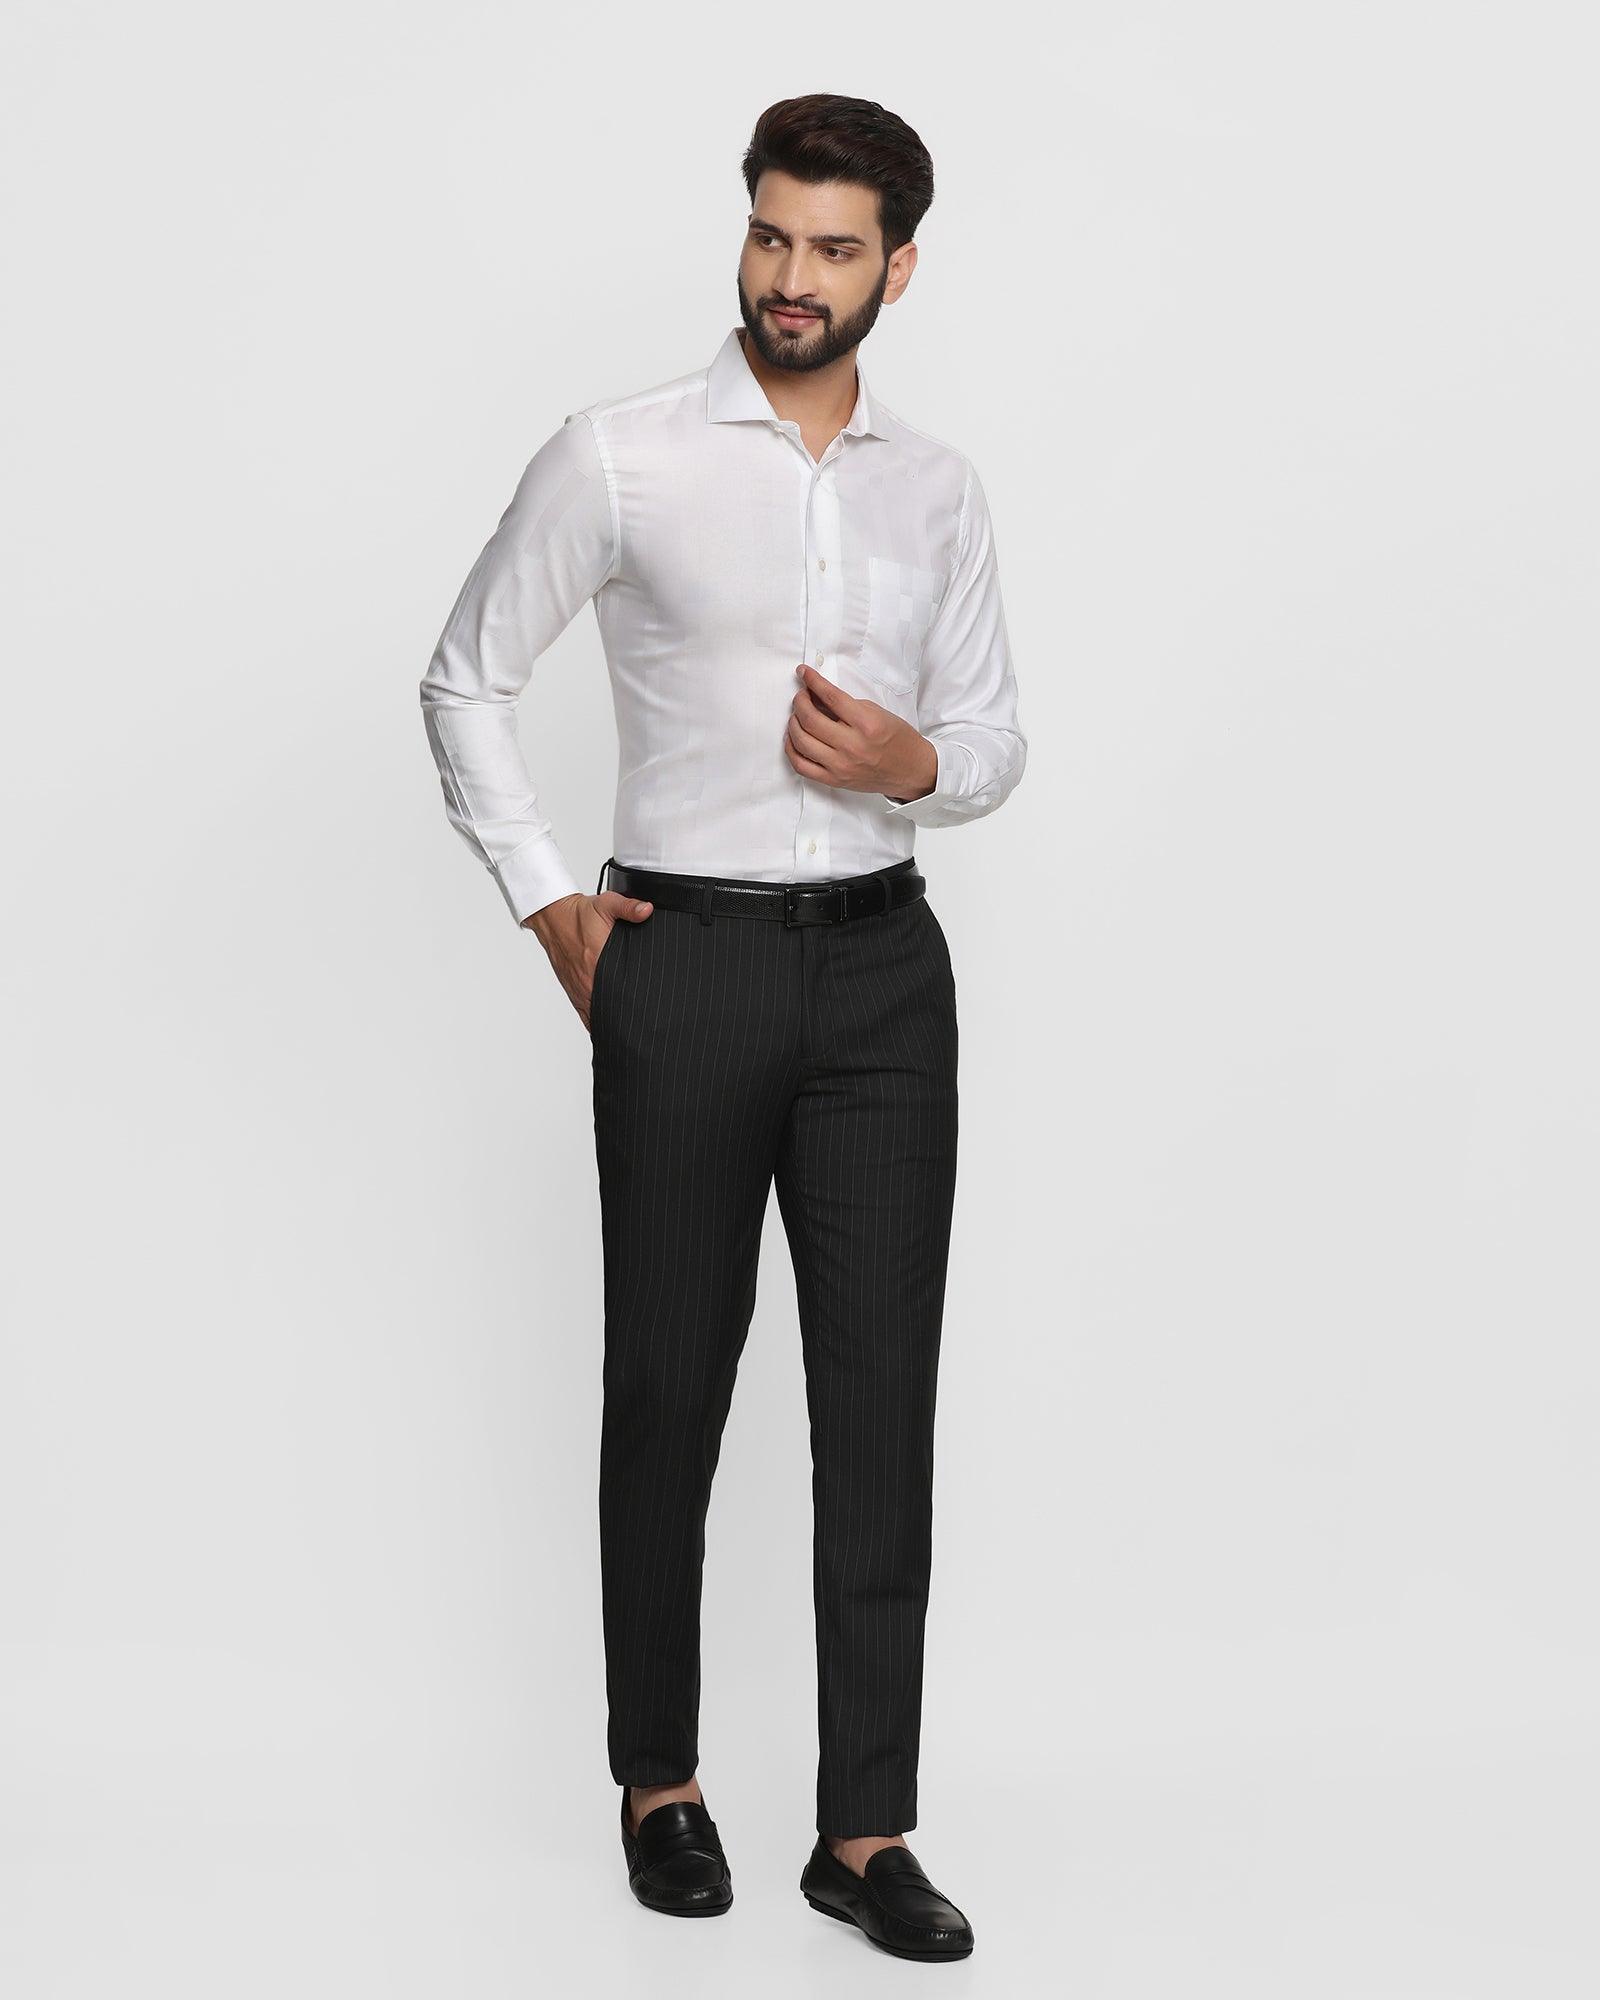 Buy RAYMOND Medium Blue Slim Fit Trouser [RMTS02930-B486F076] 40 Online -  Best Price RAYMOND Medium Blue Slim Fit Trouser [RMTS02930-B486F076] 40 -  Justdial Shop Online.